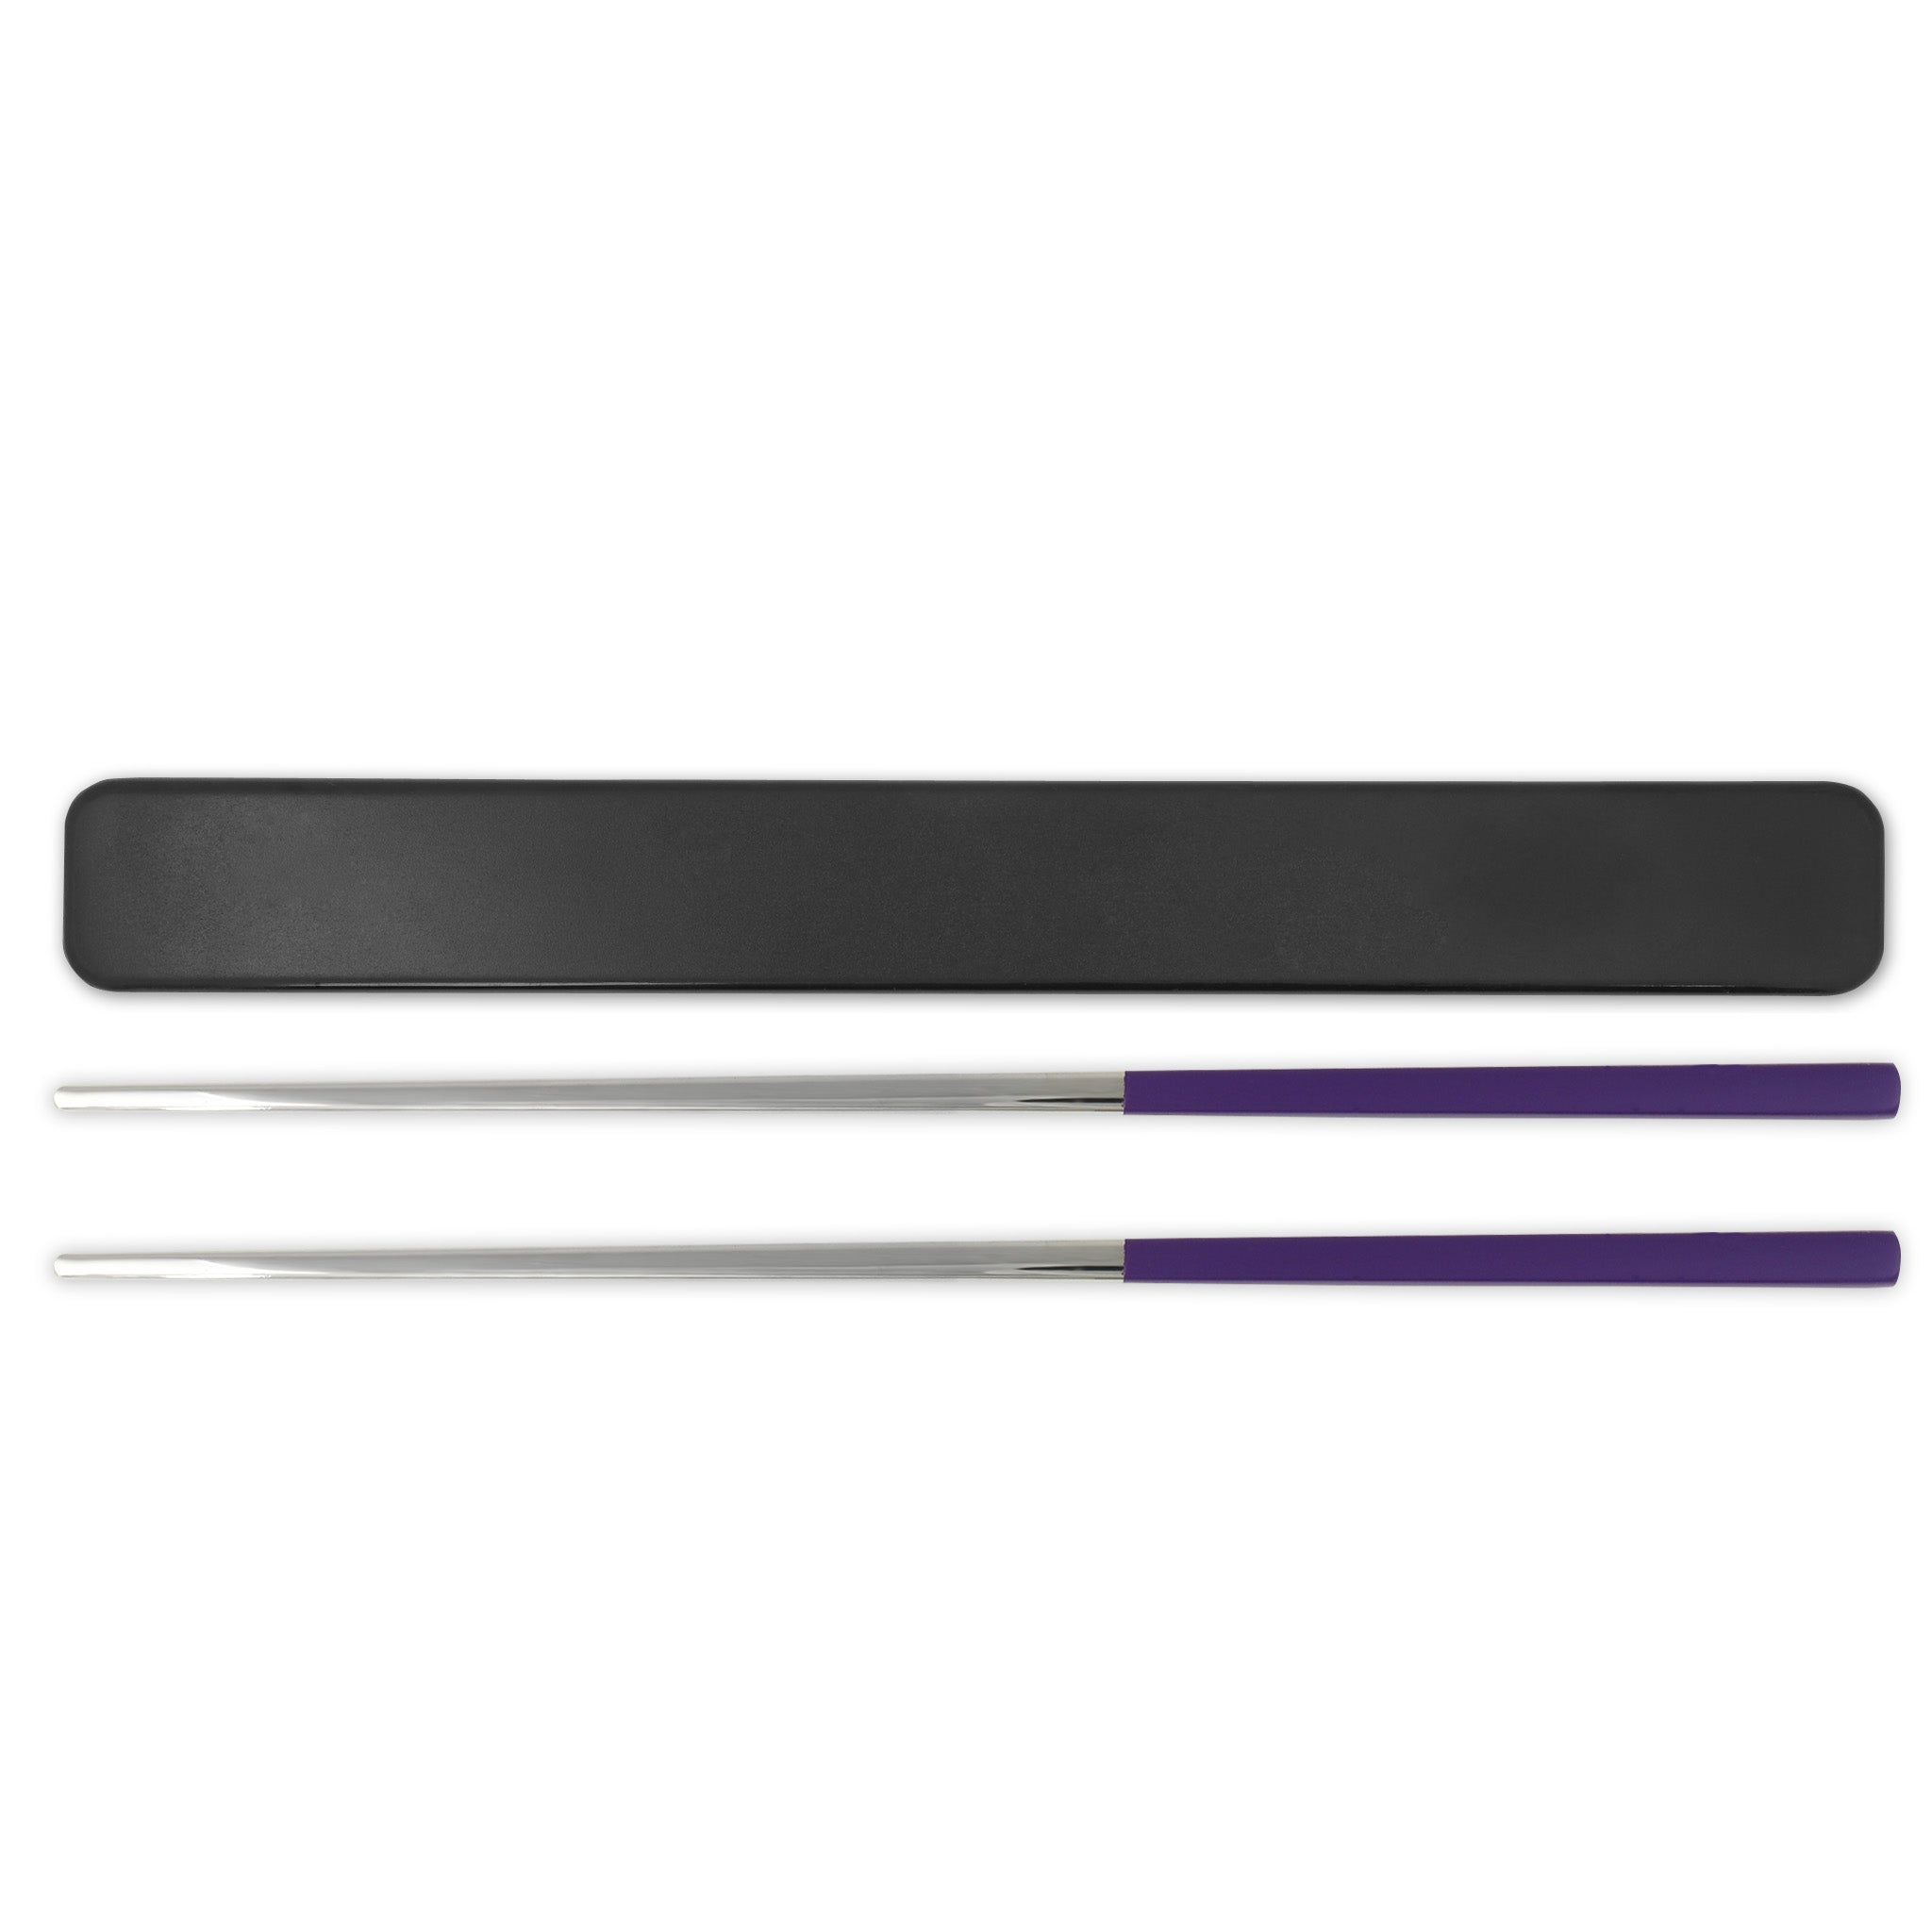 Stainless Steel Reusable Chopsticks Set (Purple / Silver)